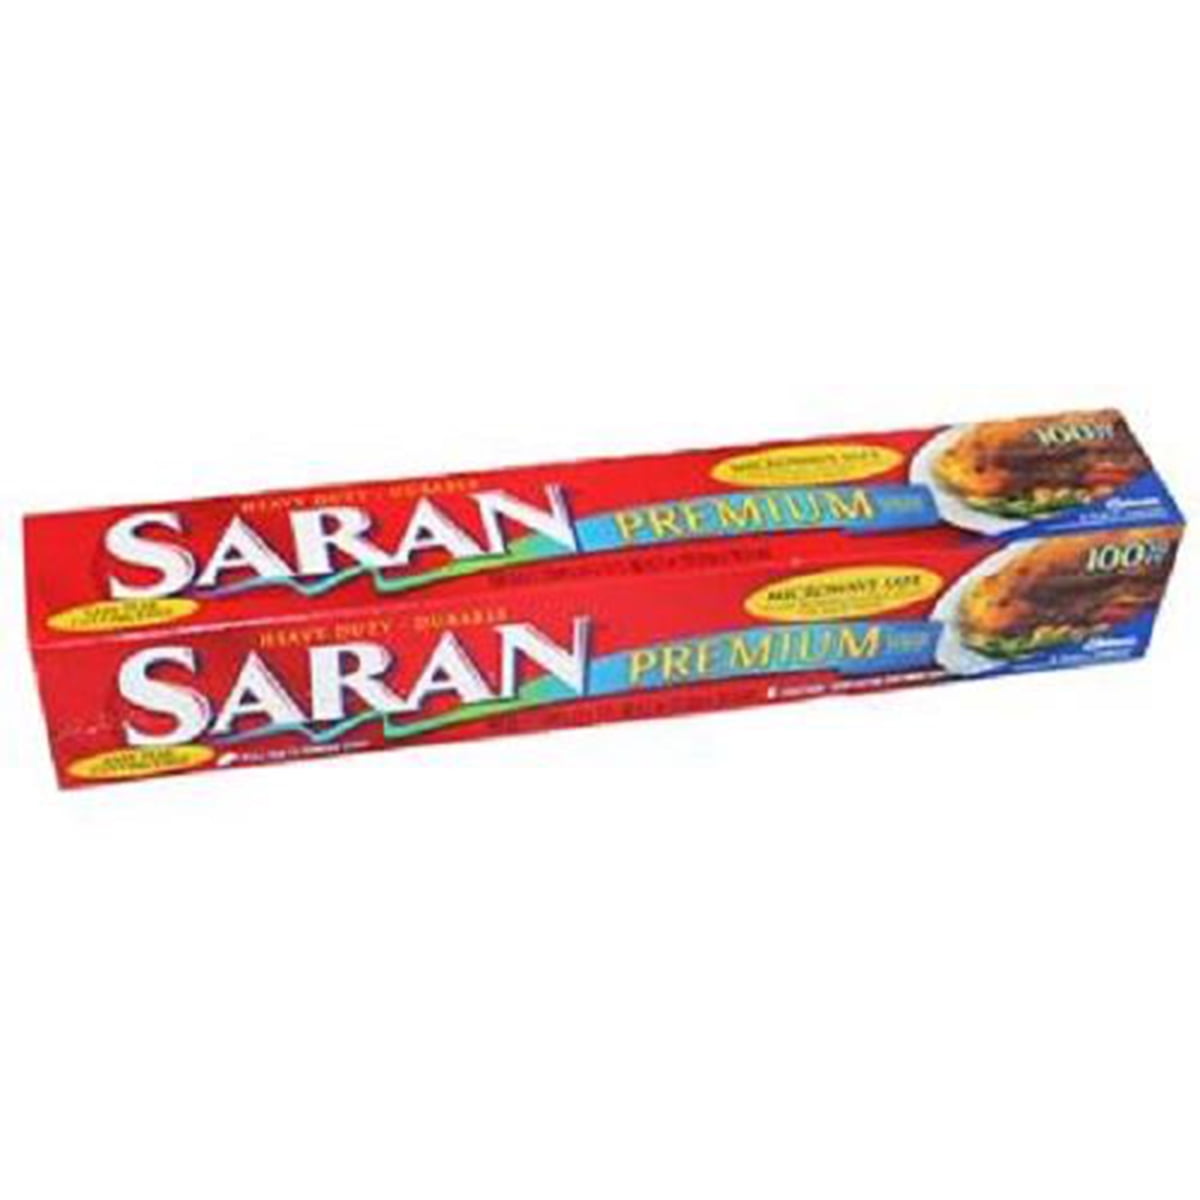 Saran Premium Heavy Duty Plastic Food Wrap 100 Sq Ft